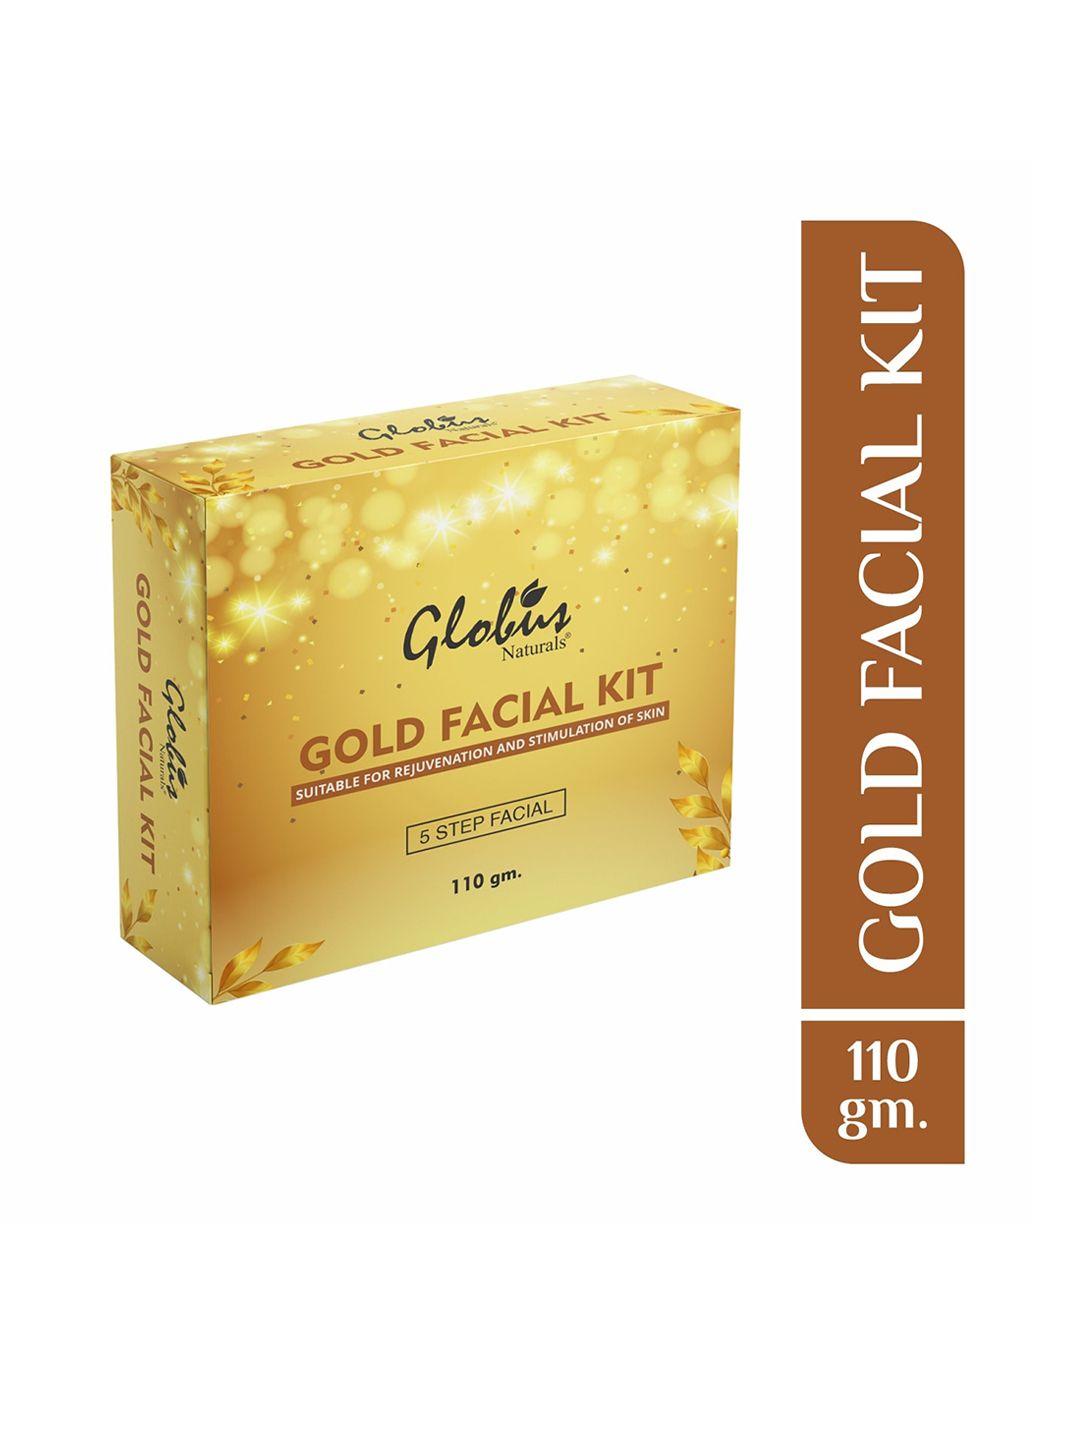 globus naturals gold facial kit for illuminating skin bridal radiance kit